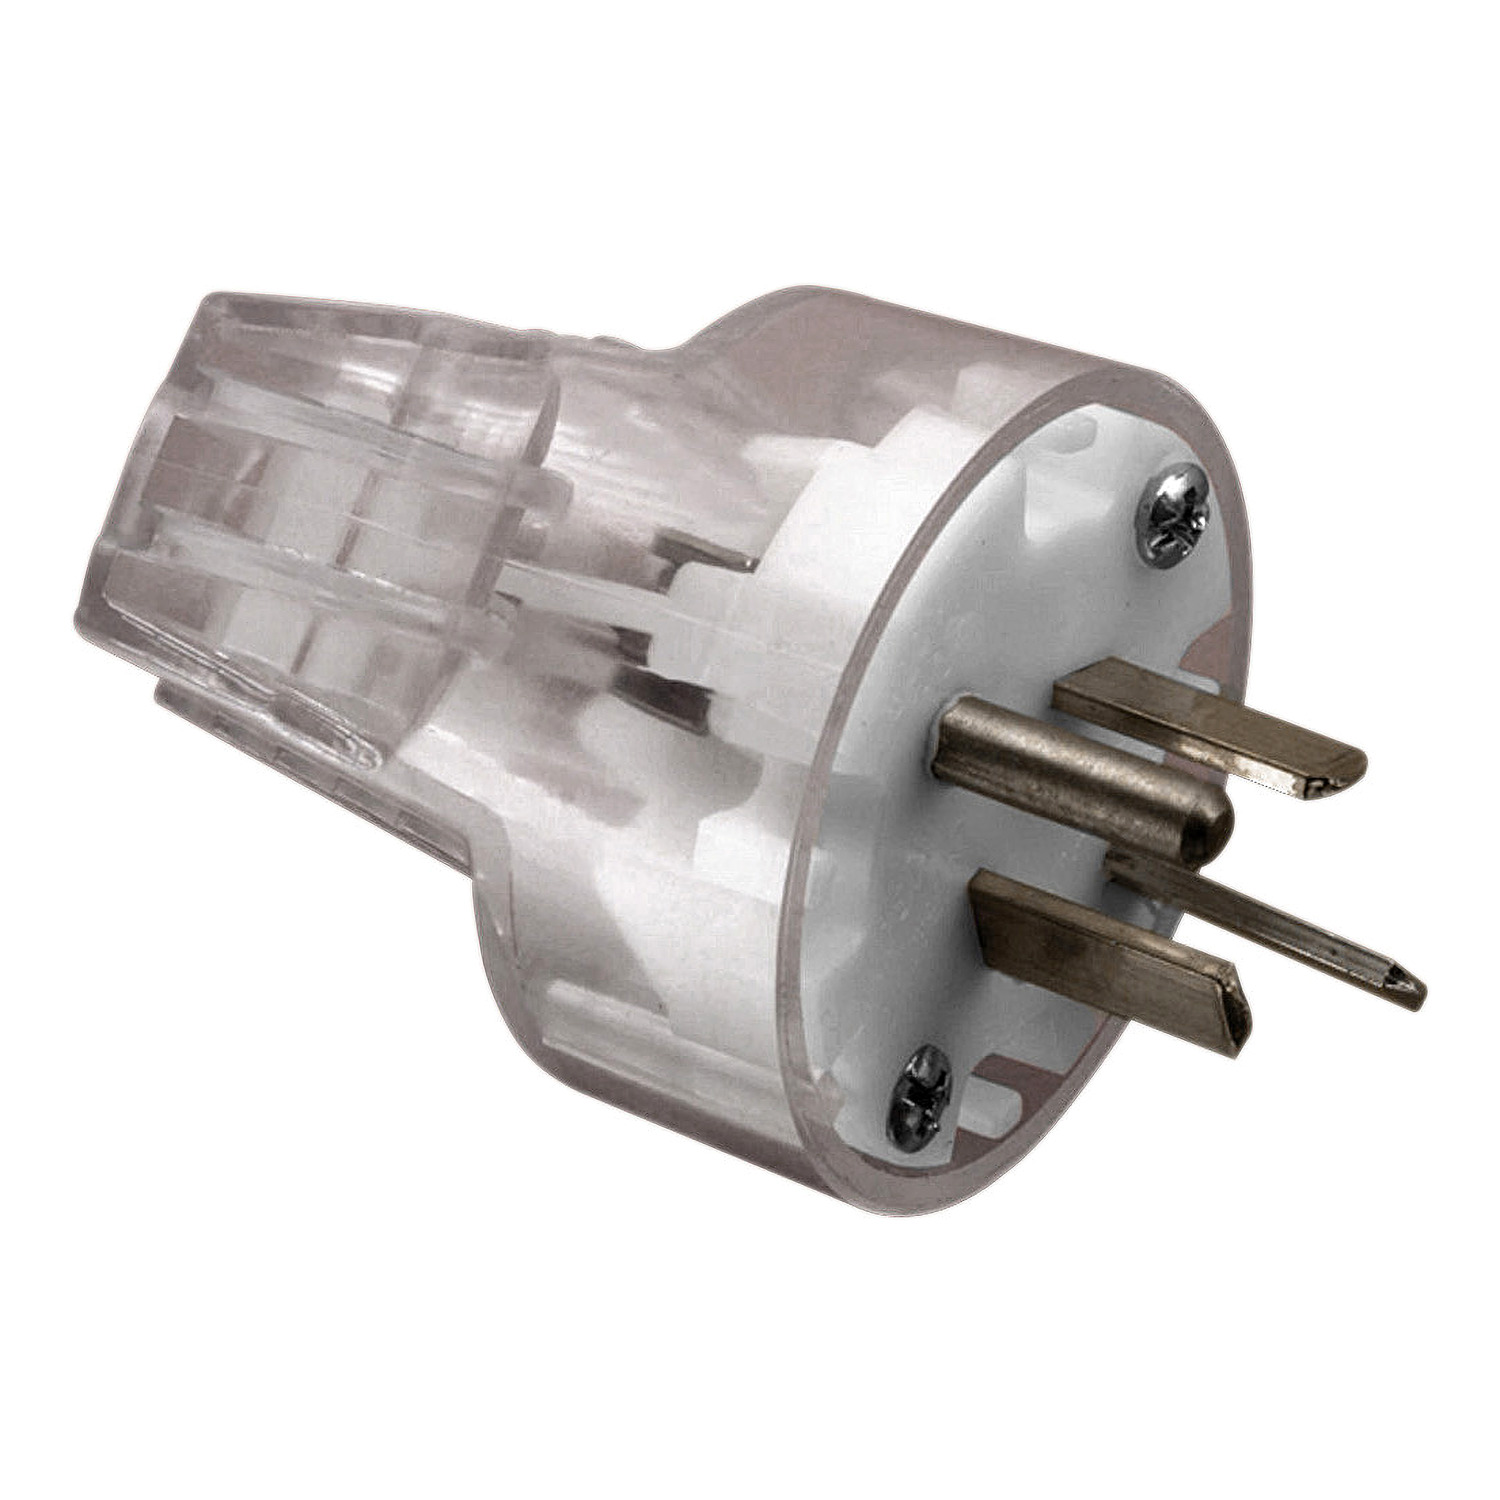 Rewireable Plugs, Plug rigid 500V 10A 4 pin to suit 413/4P